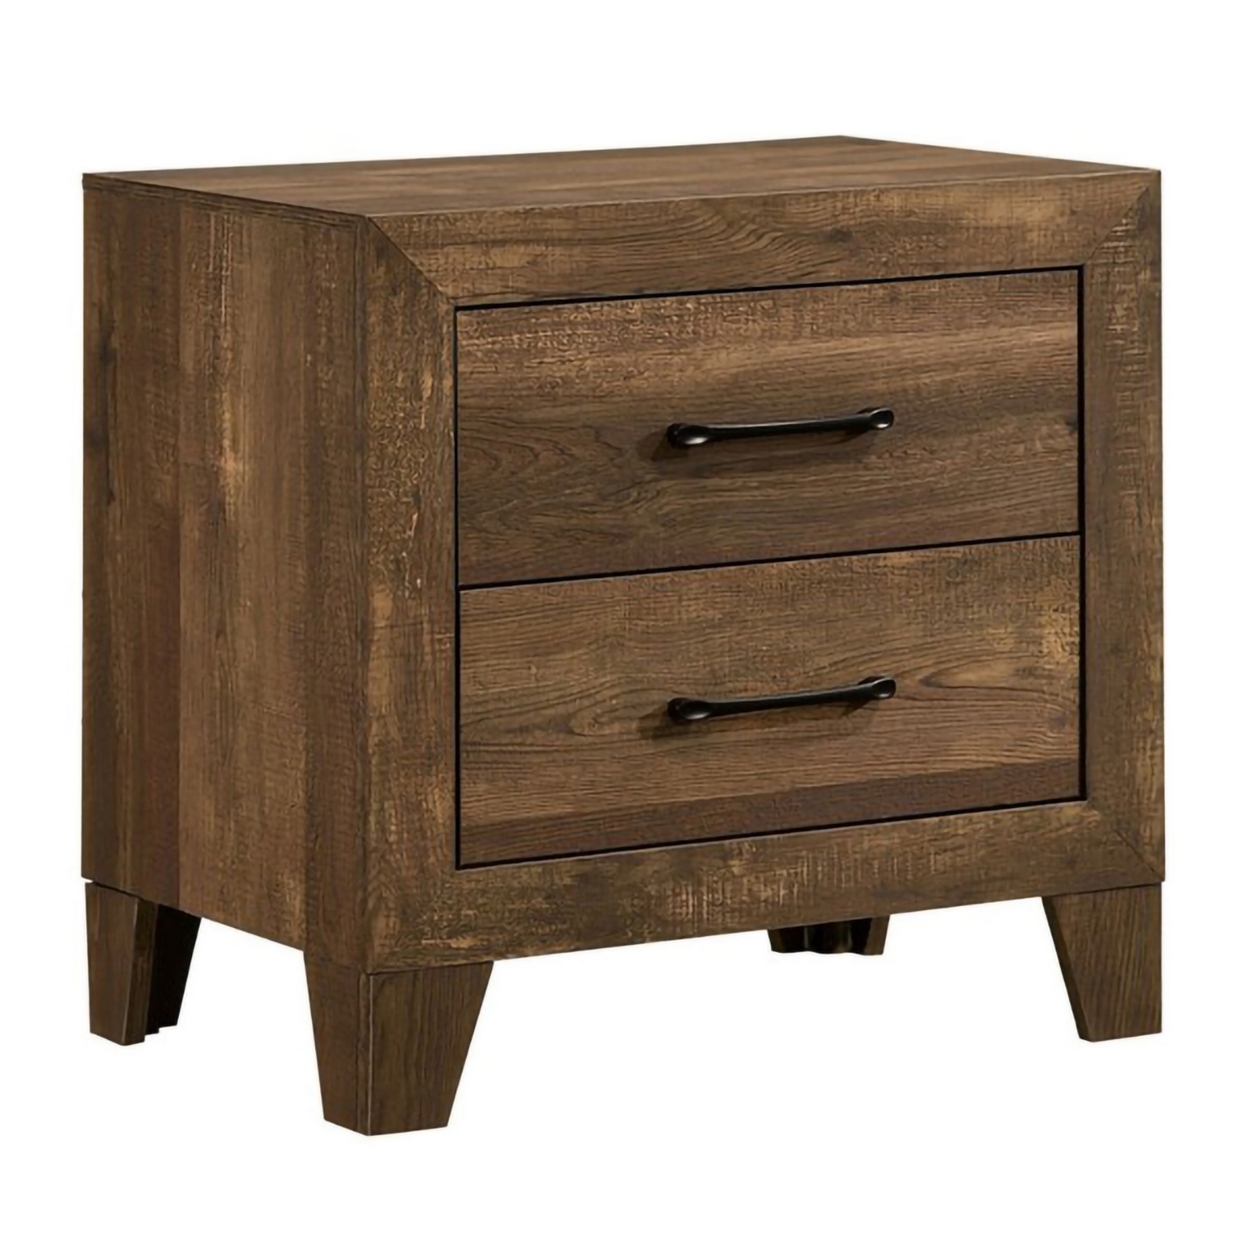 Rustic 2 Drawer Wooden Nightstand With Grain Details, Brown- Saltoro Sherpi